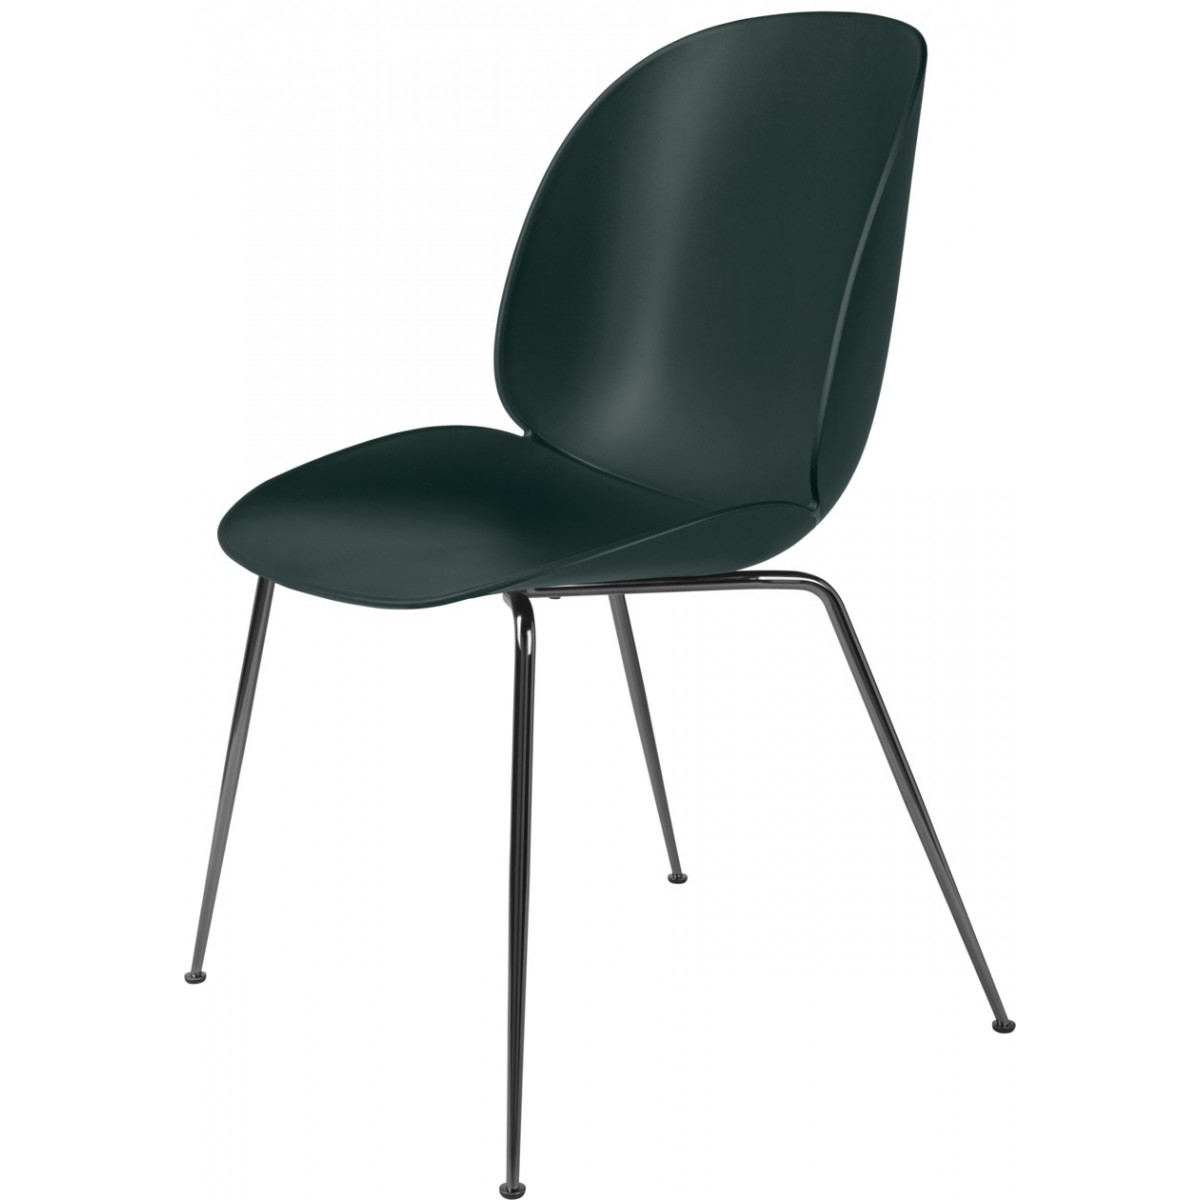 dark green shell - black chrome base - Beetle chair plastic